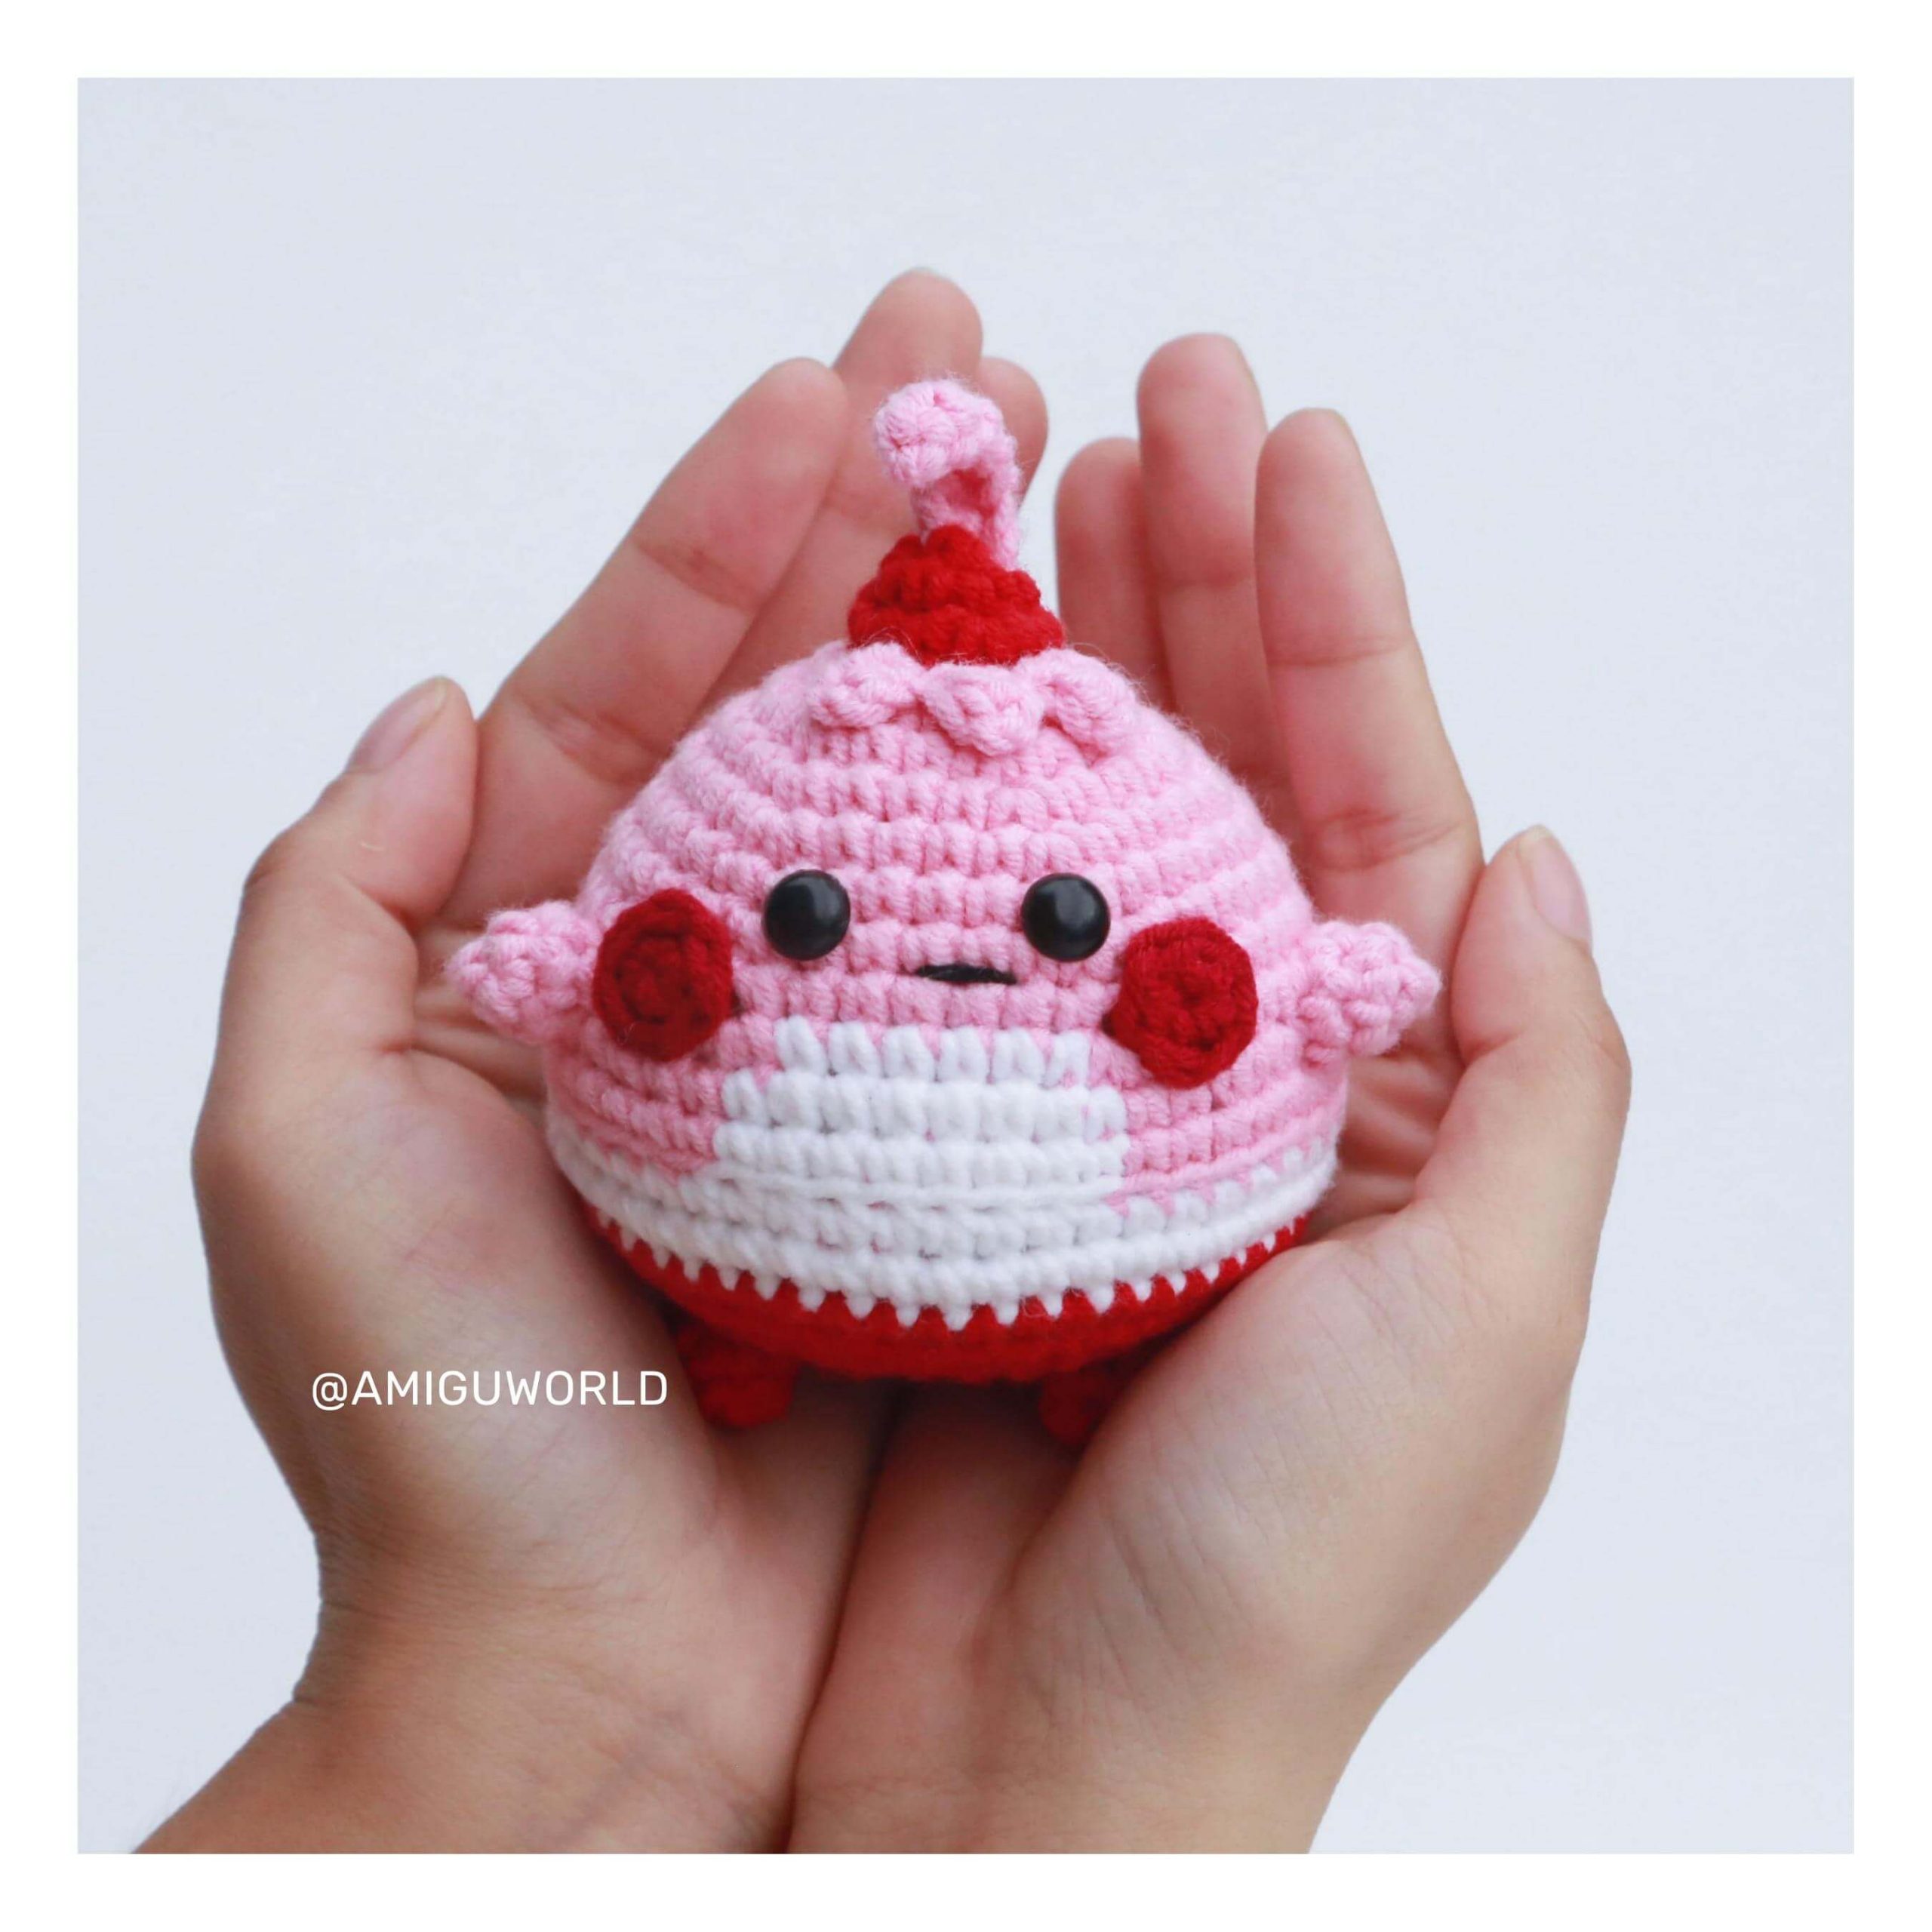 Happiny-amigurumi-crochet-pattern-amiguworld (5)